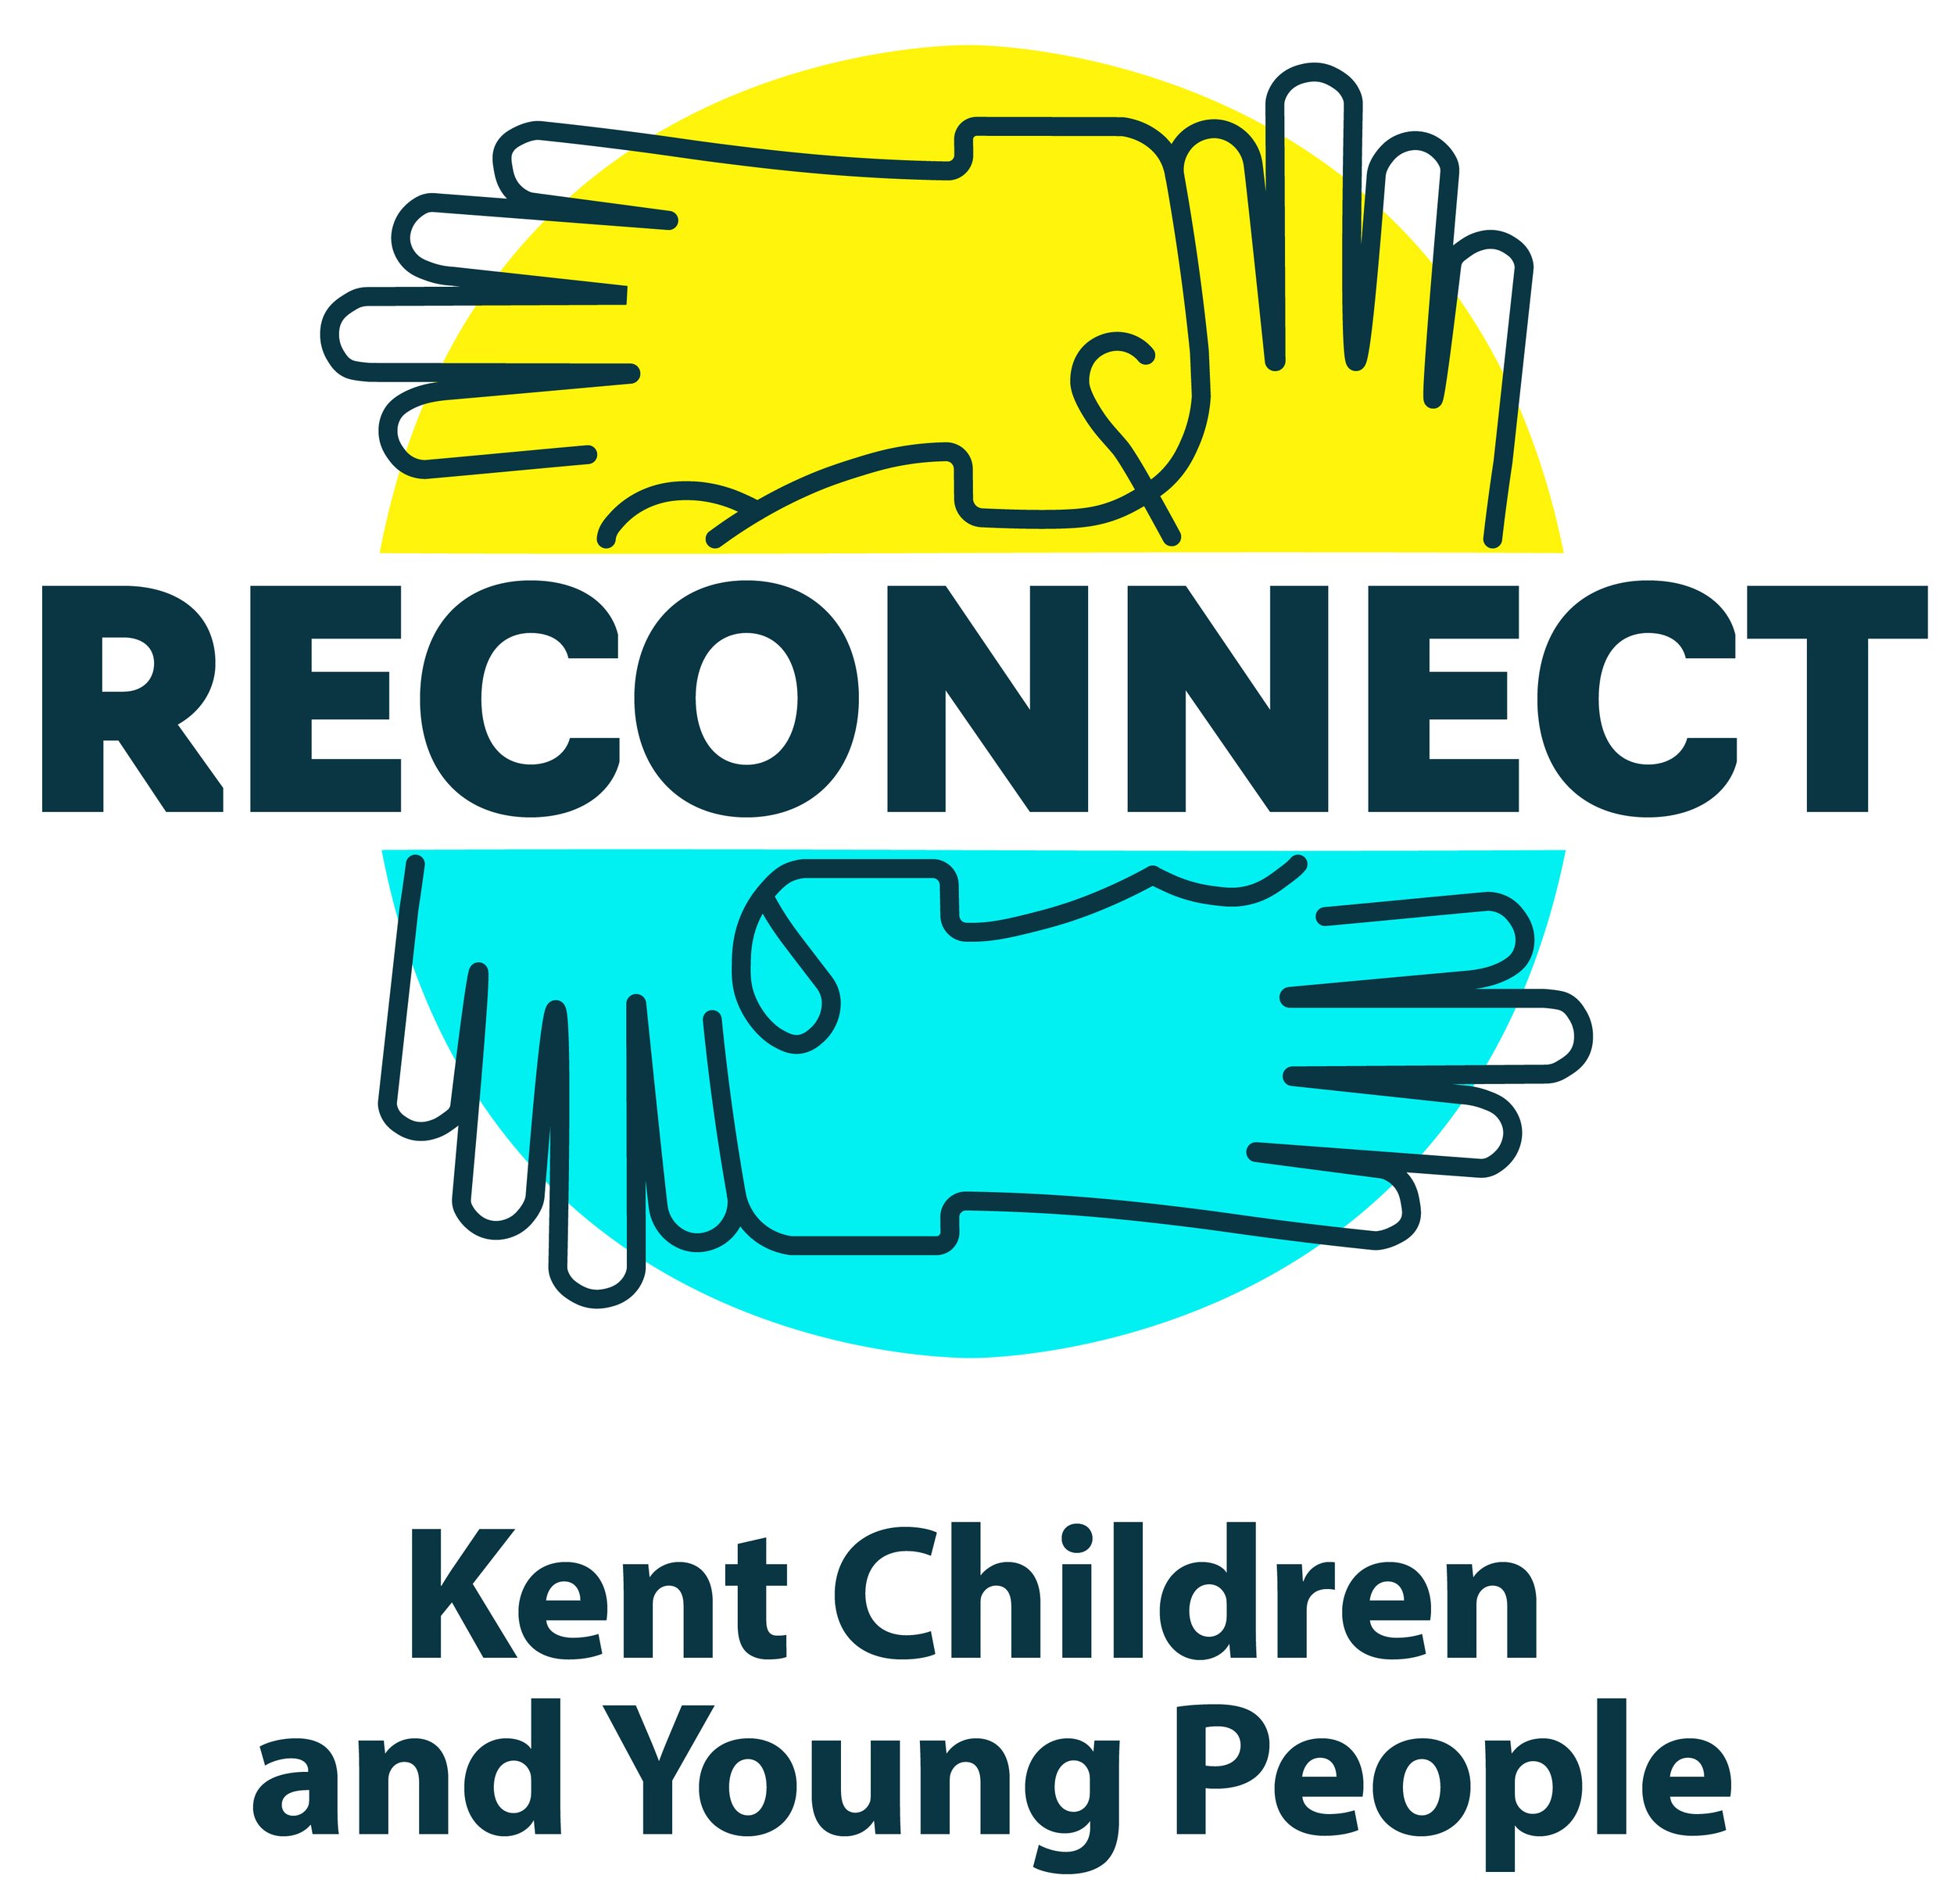 Reconnect Kent